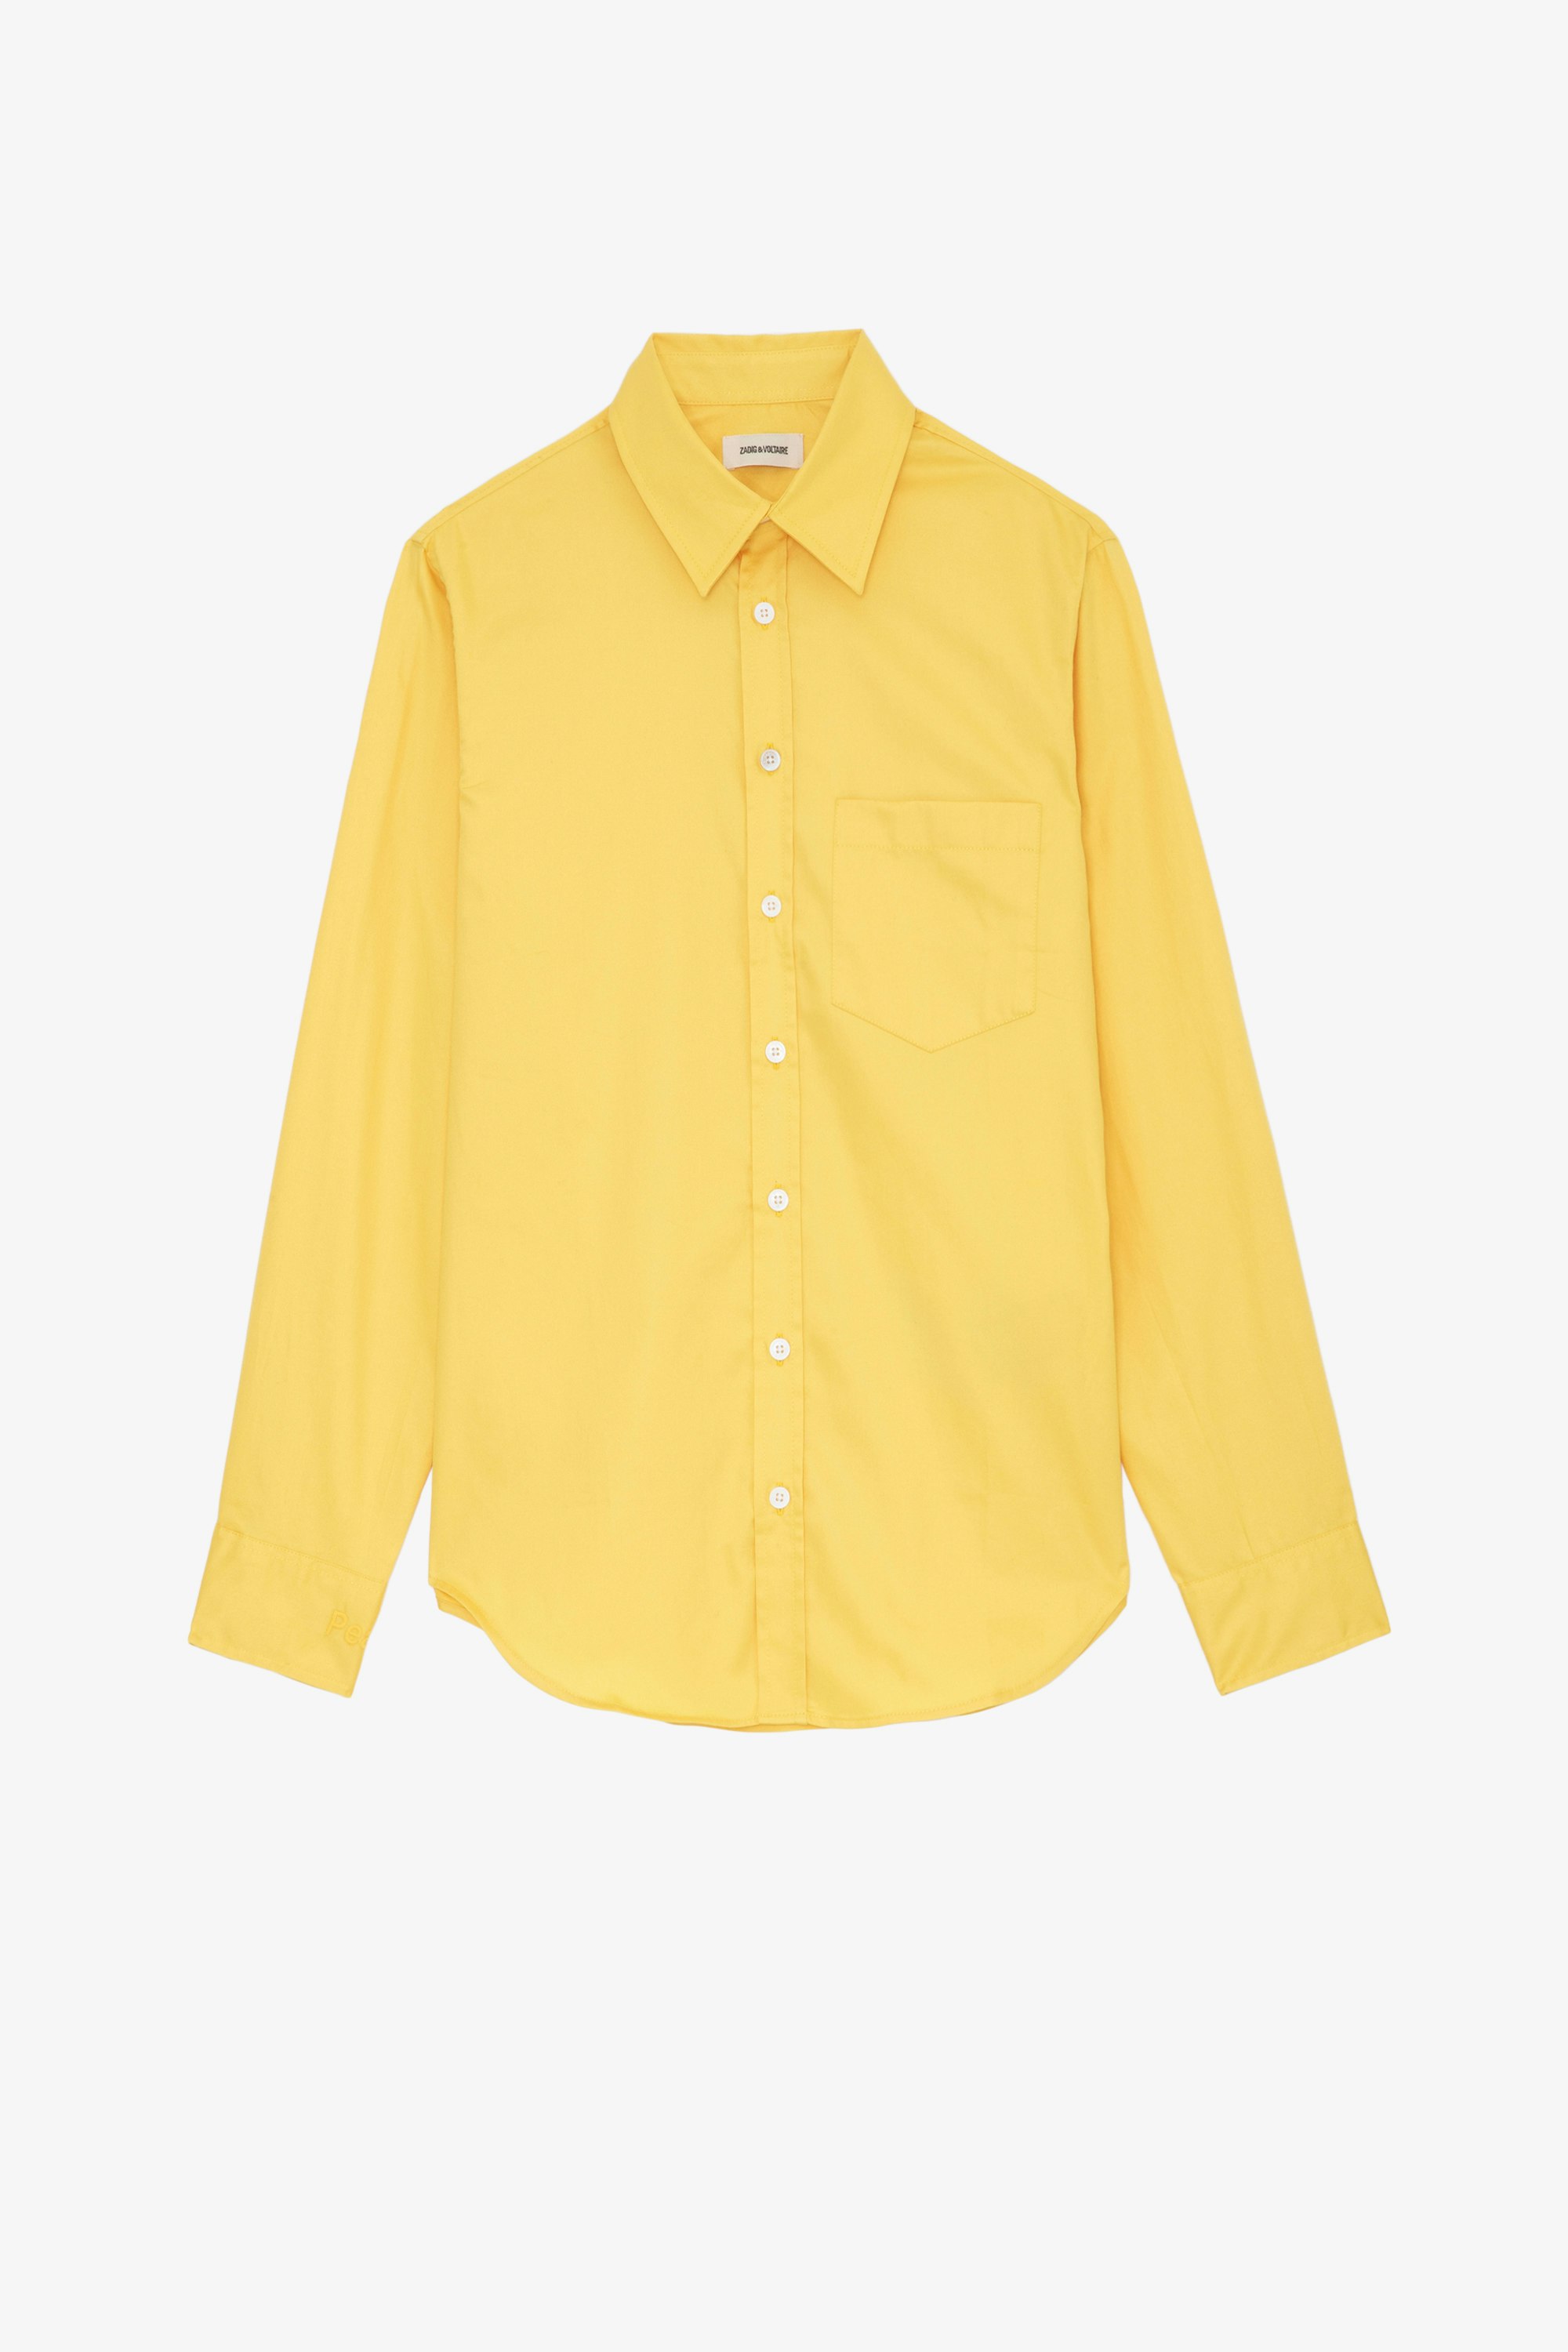 Taskiz Shirt Women's yellow cotton shirt with "Peace" embroidery on left sleeve.